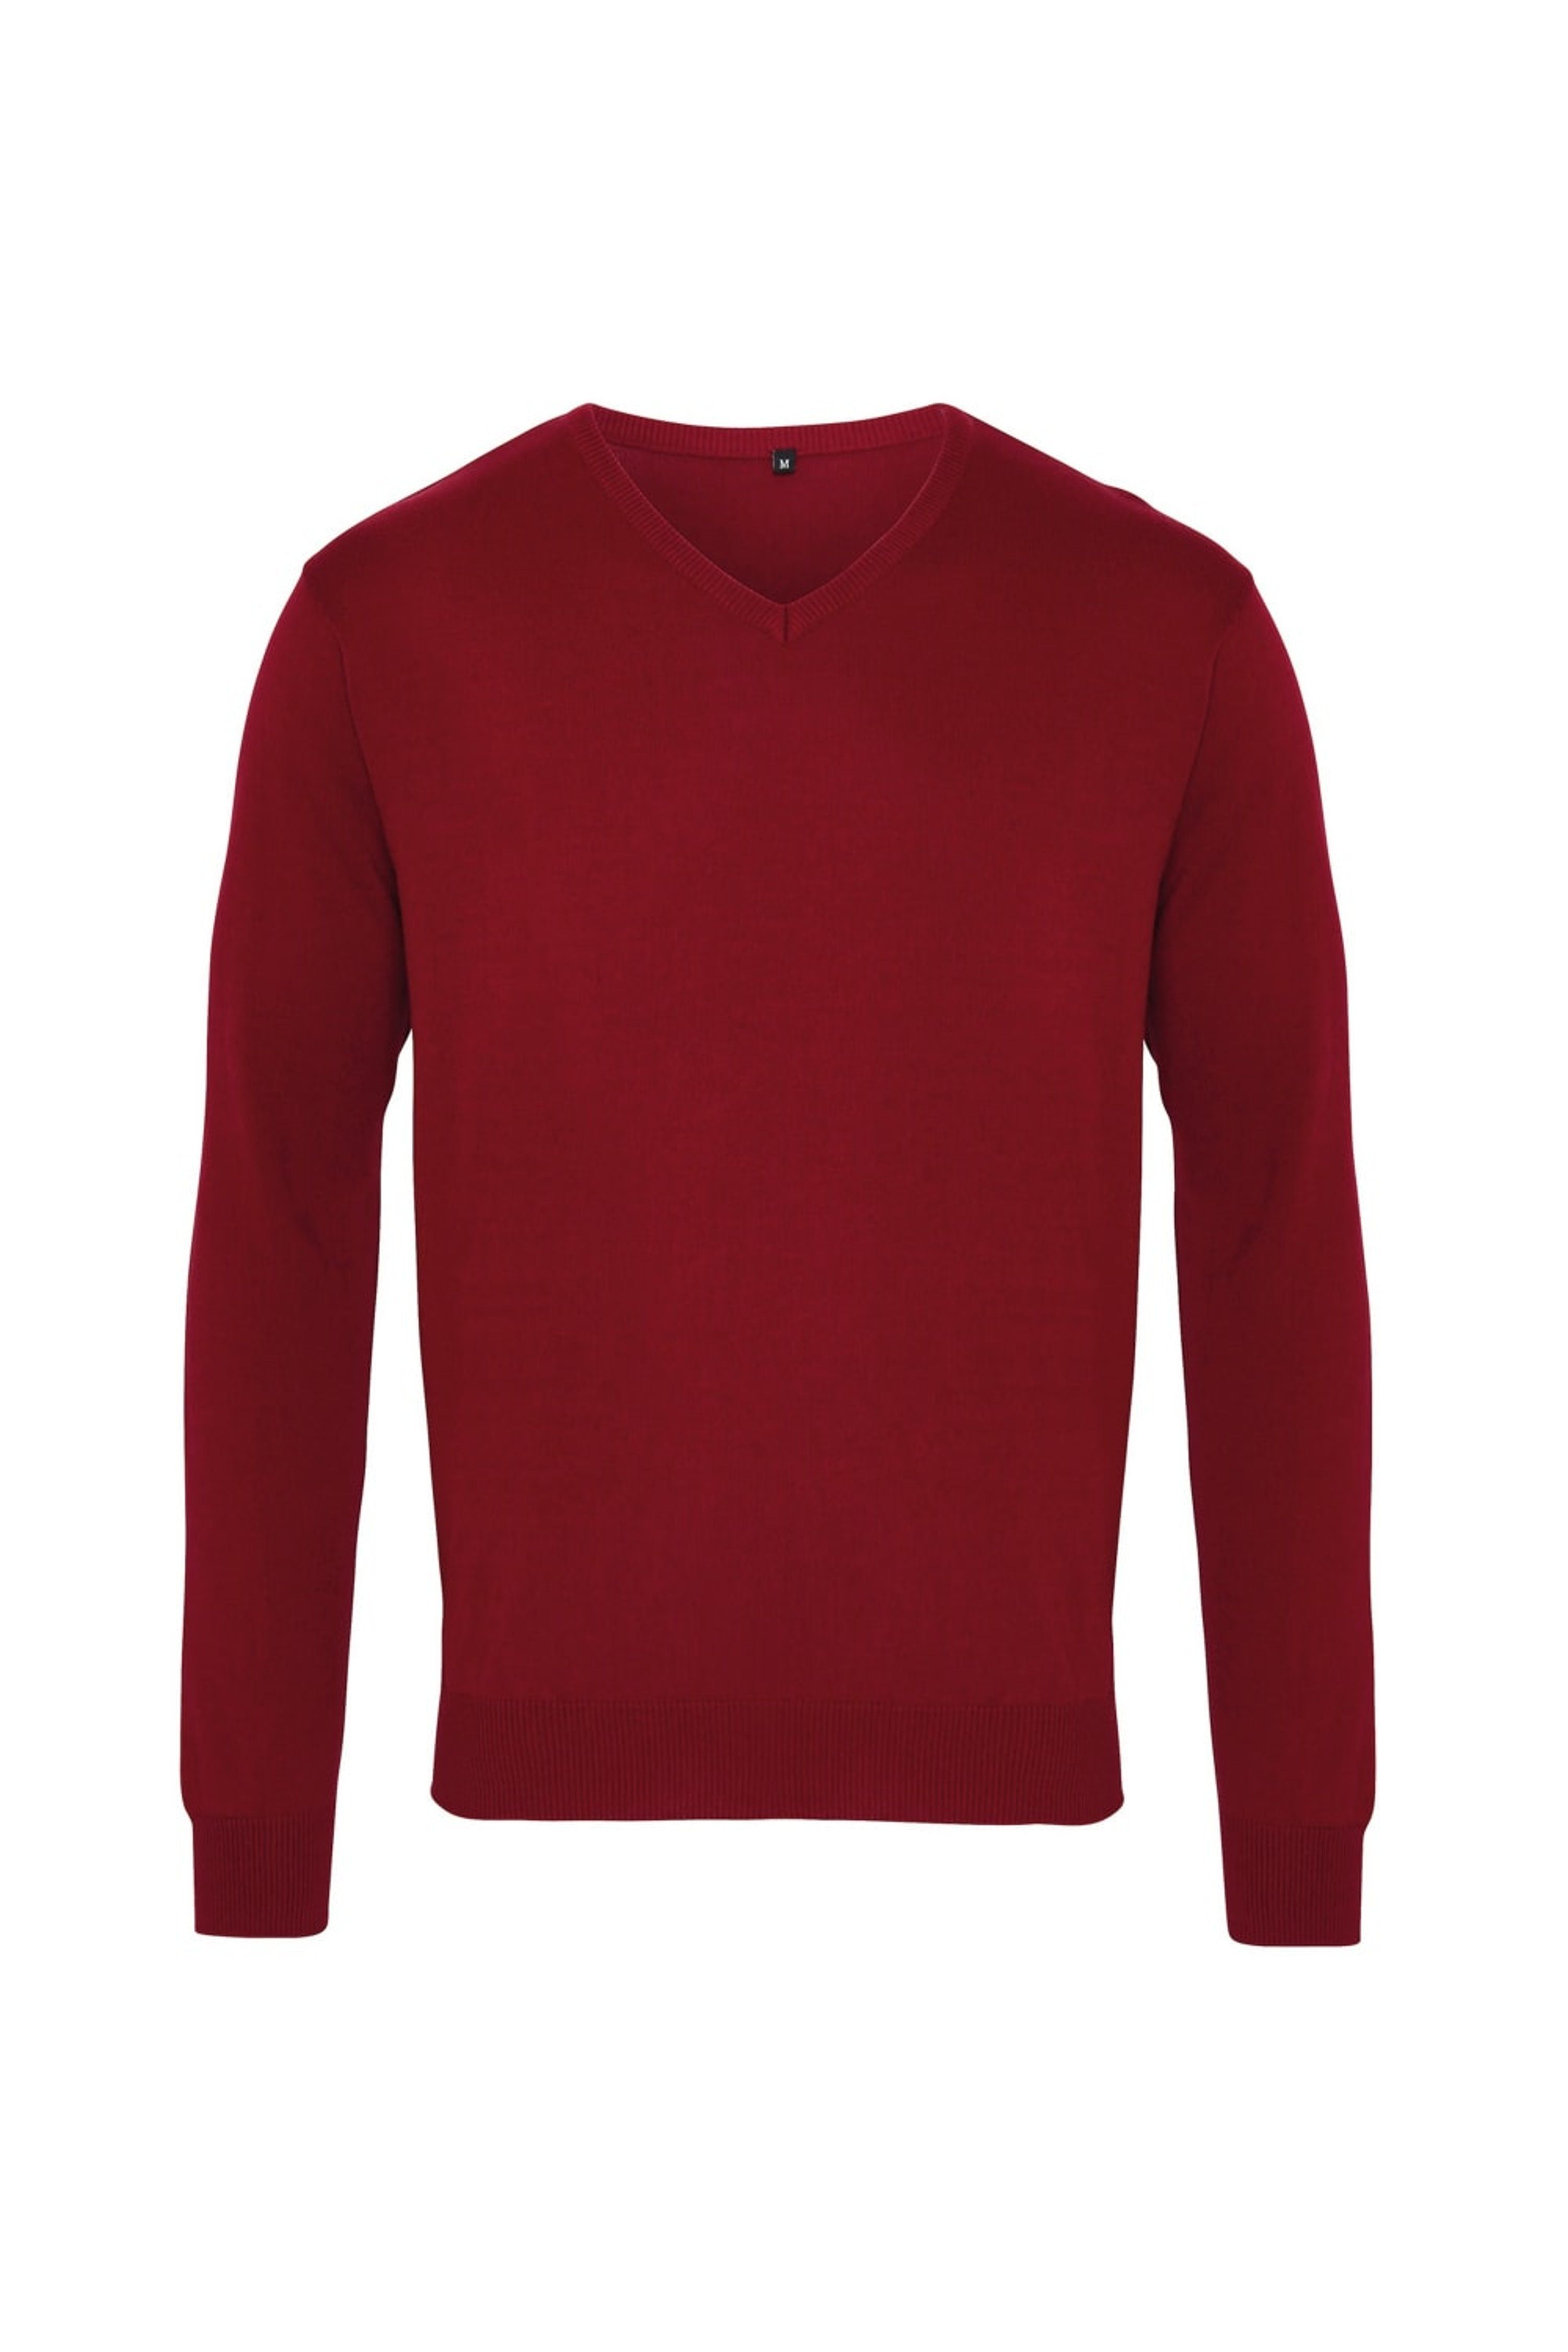 Premier Mens V-Neck Knitted Sweater (Burgundy) - XL - Also in: L, 2XL, XXS, XS, XXXL, S, M | Verishop